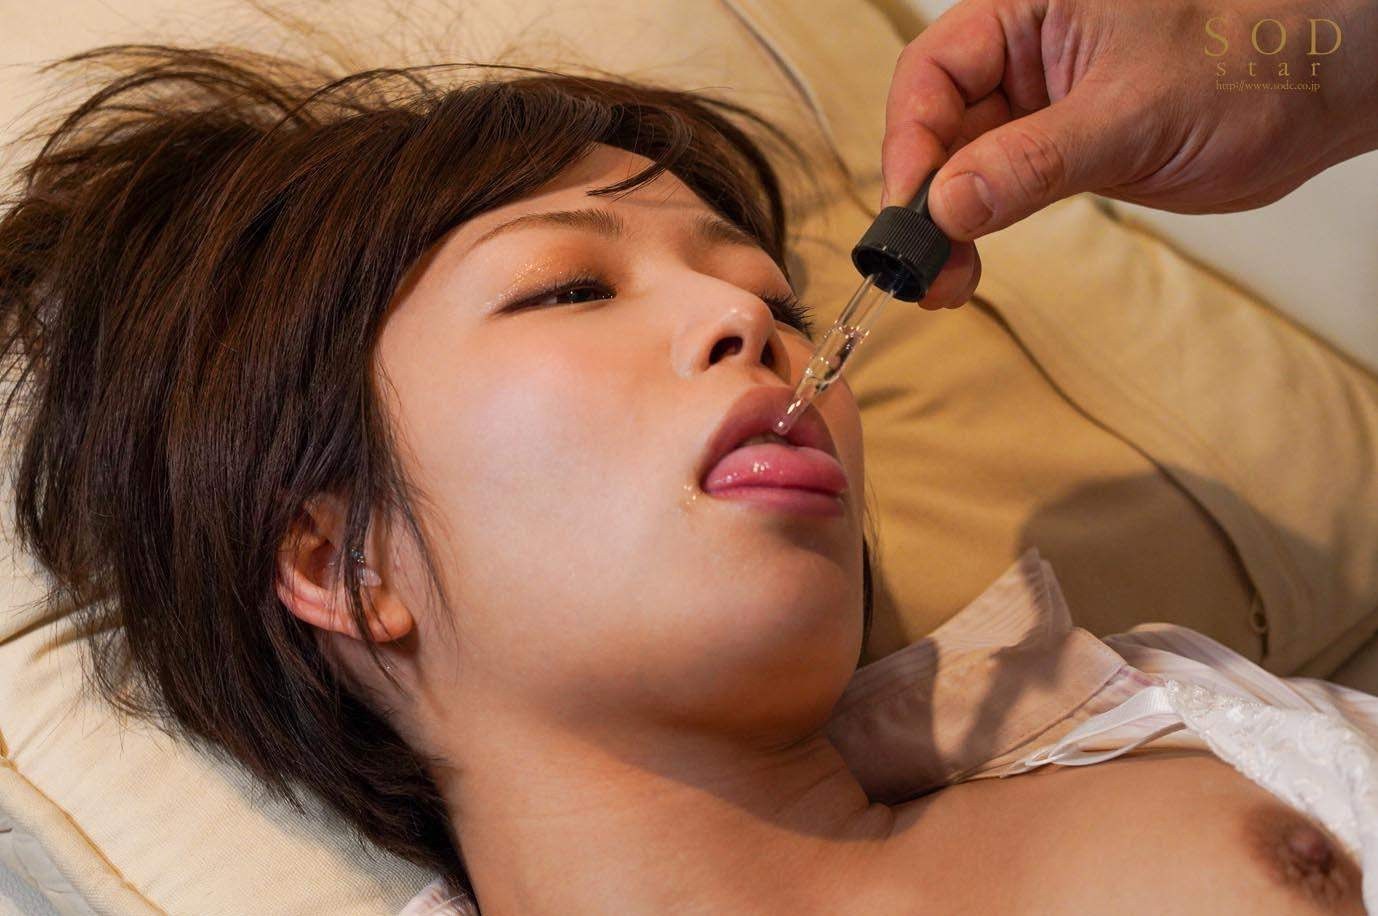 Japanese Aphrodisiac - Porn Girls Spiked with A Strong Aphrodisiac (59 photos) - sex eporner pics